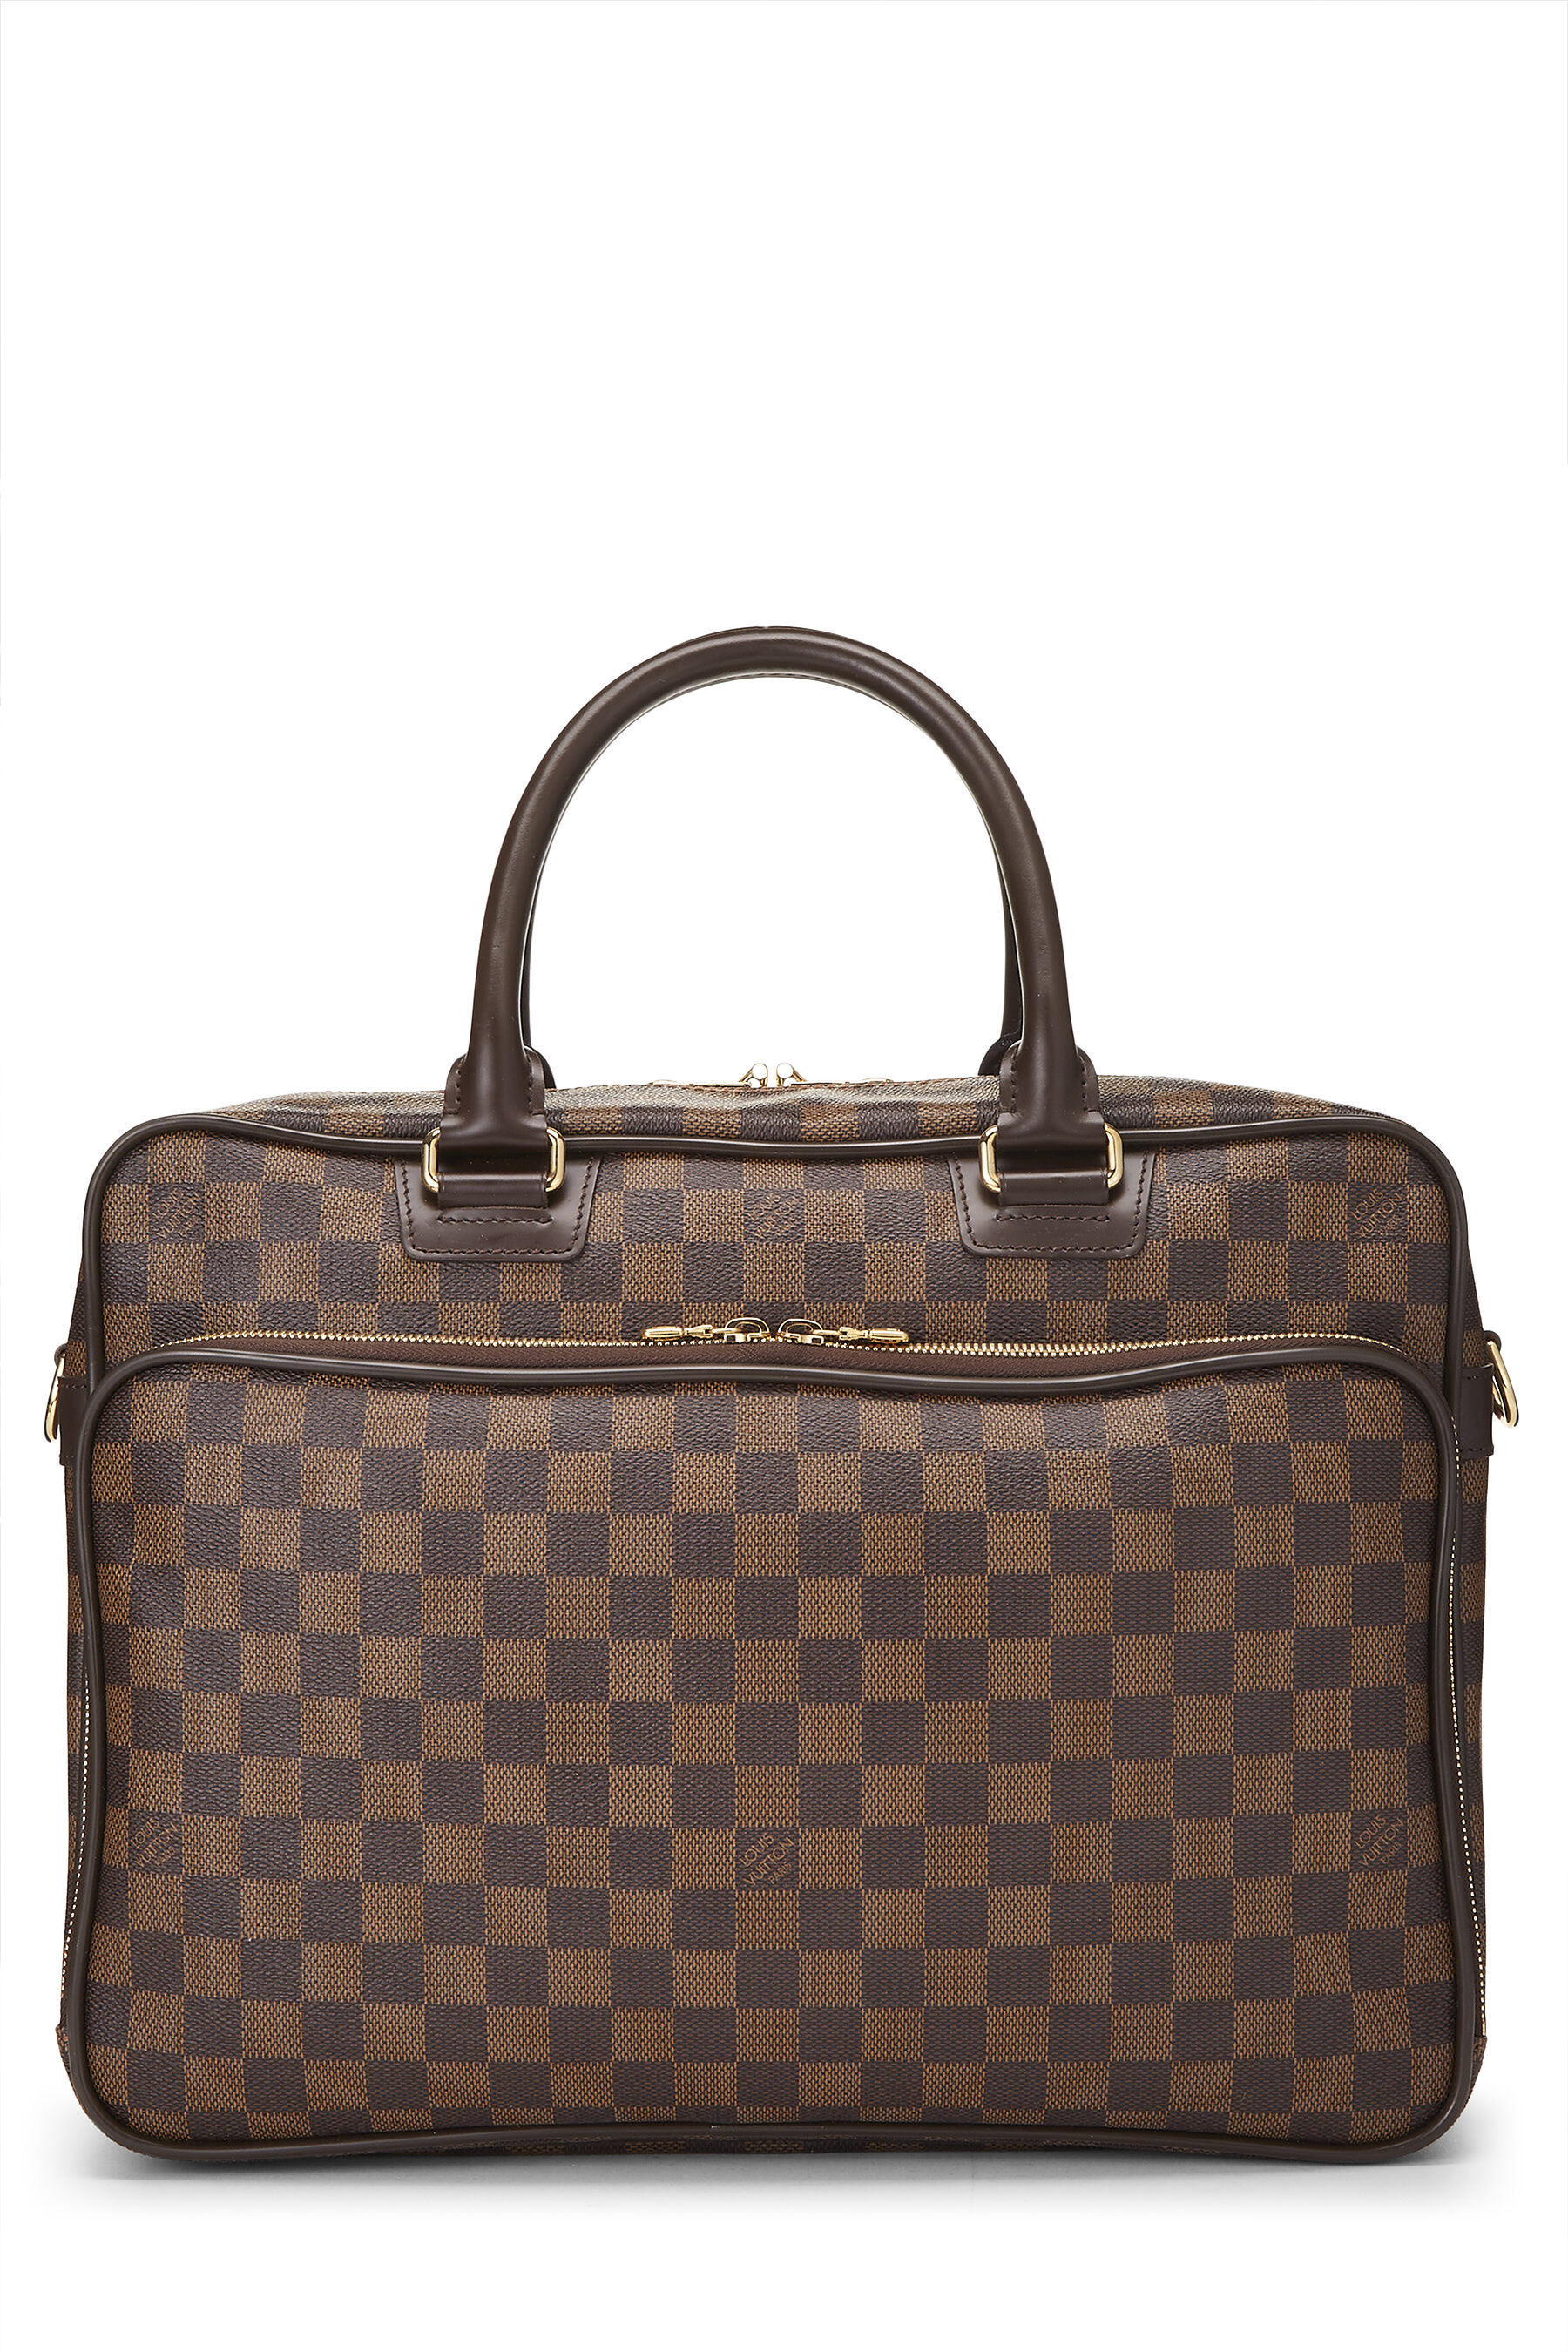 NTWRK - Louis Vuitton Icare Messenger Bag